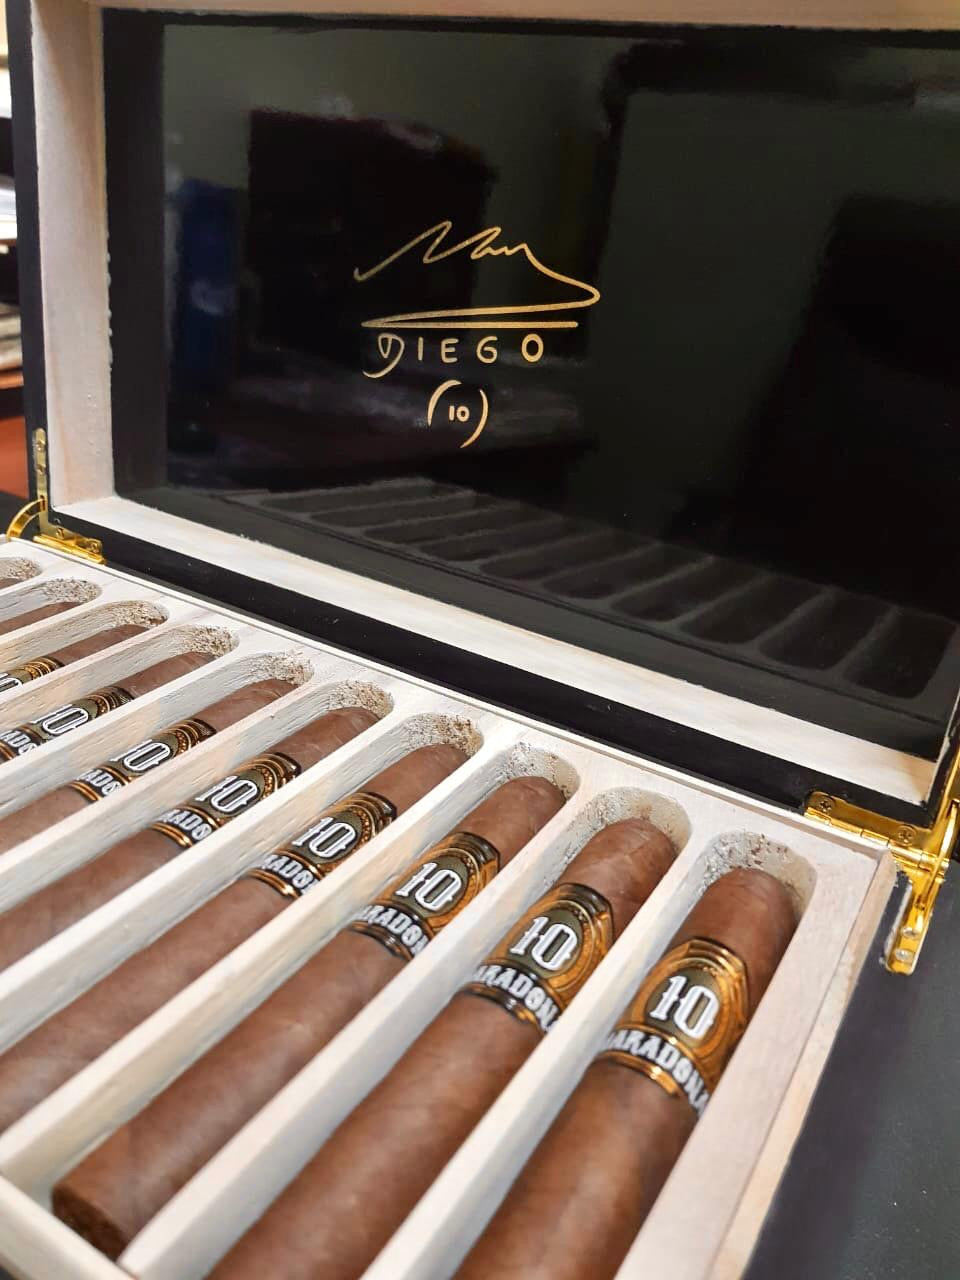 Maradona Tribute Ltd.Ed Cigars Box of 20